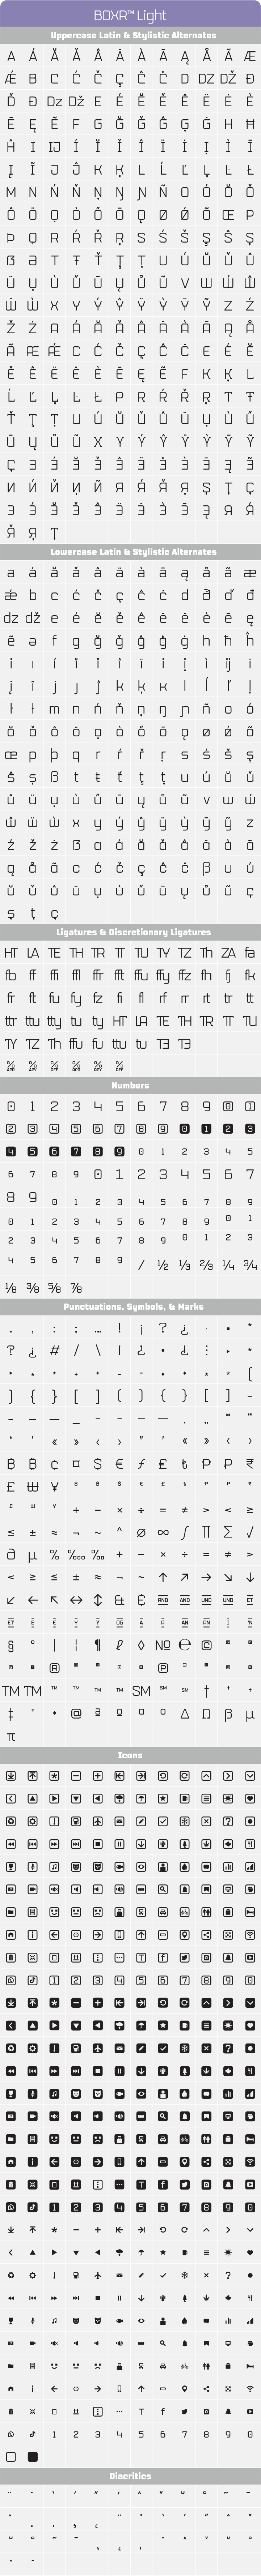 Boxr-Fonts-Light-Glyph-Tables.png